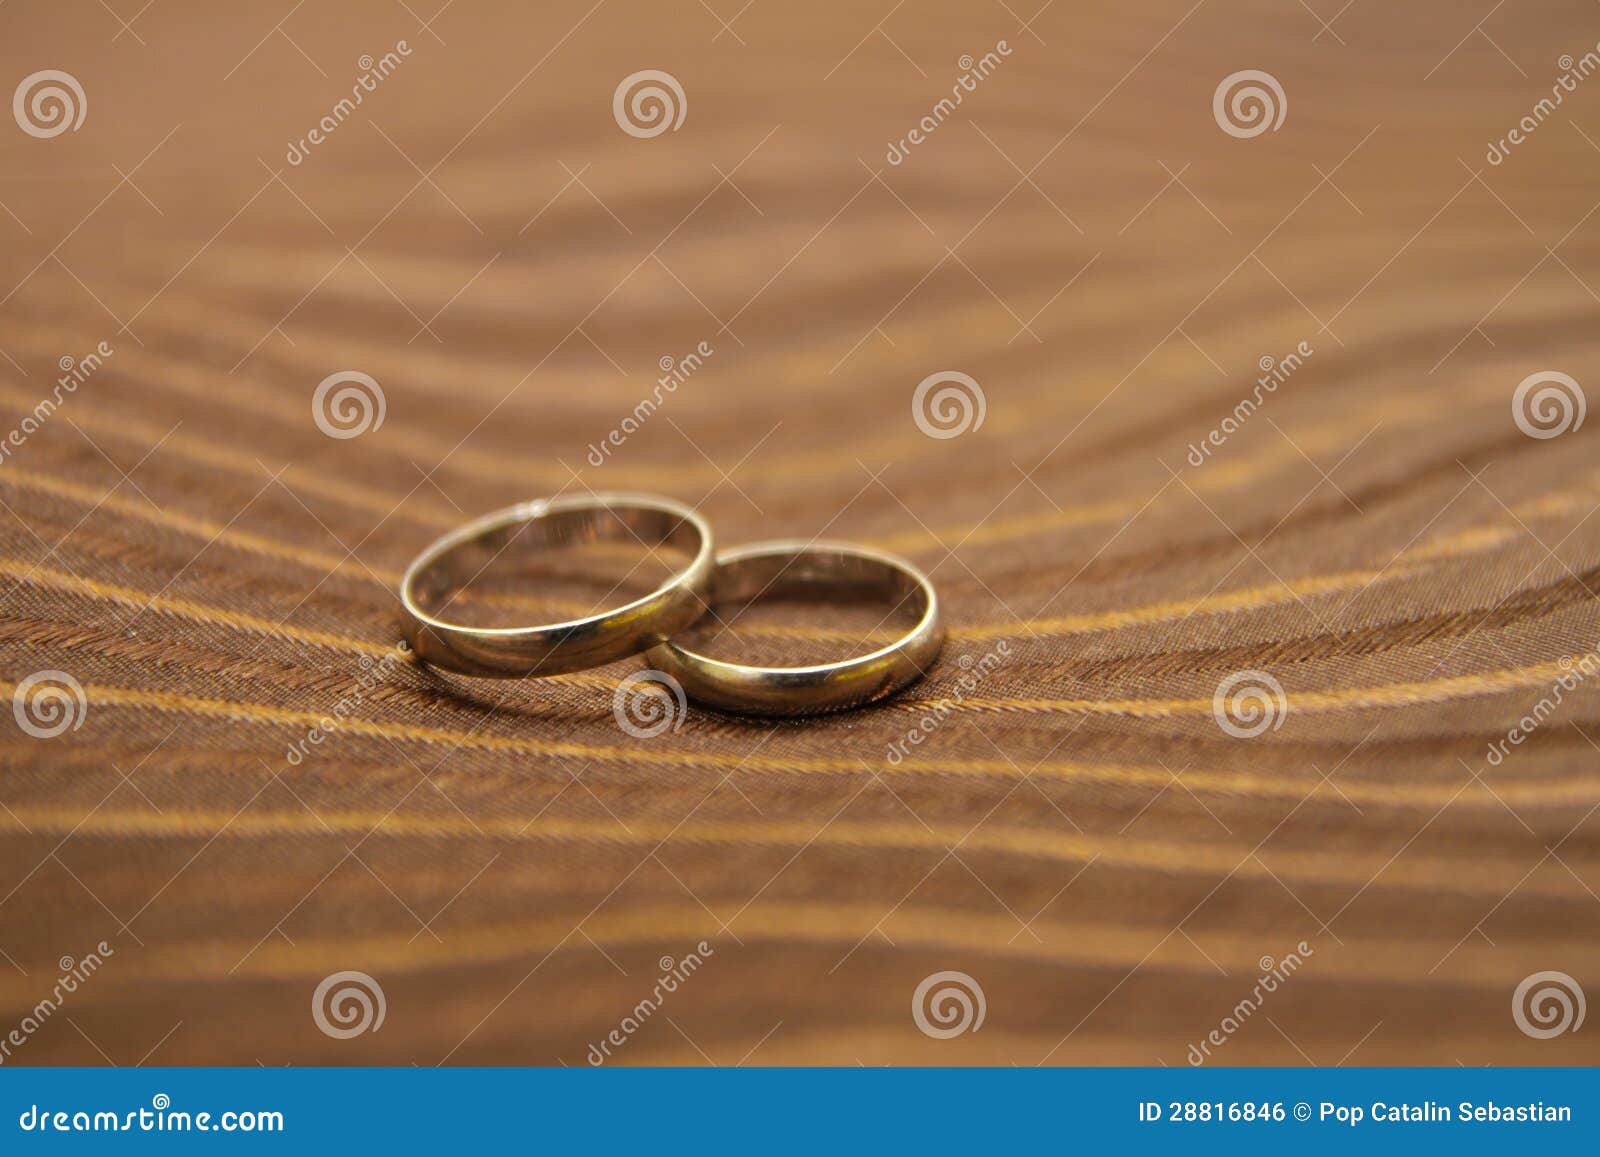 Wedding rings stock photo. Image of closeup, bride, gold - 28816846